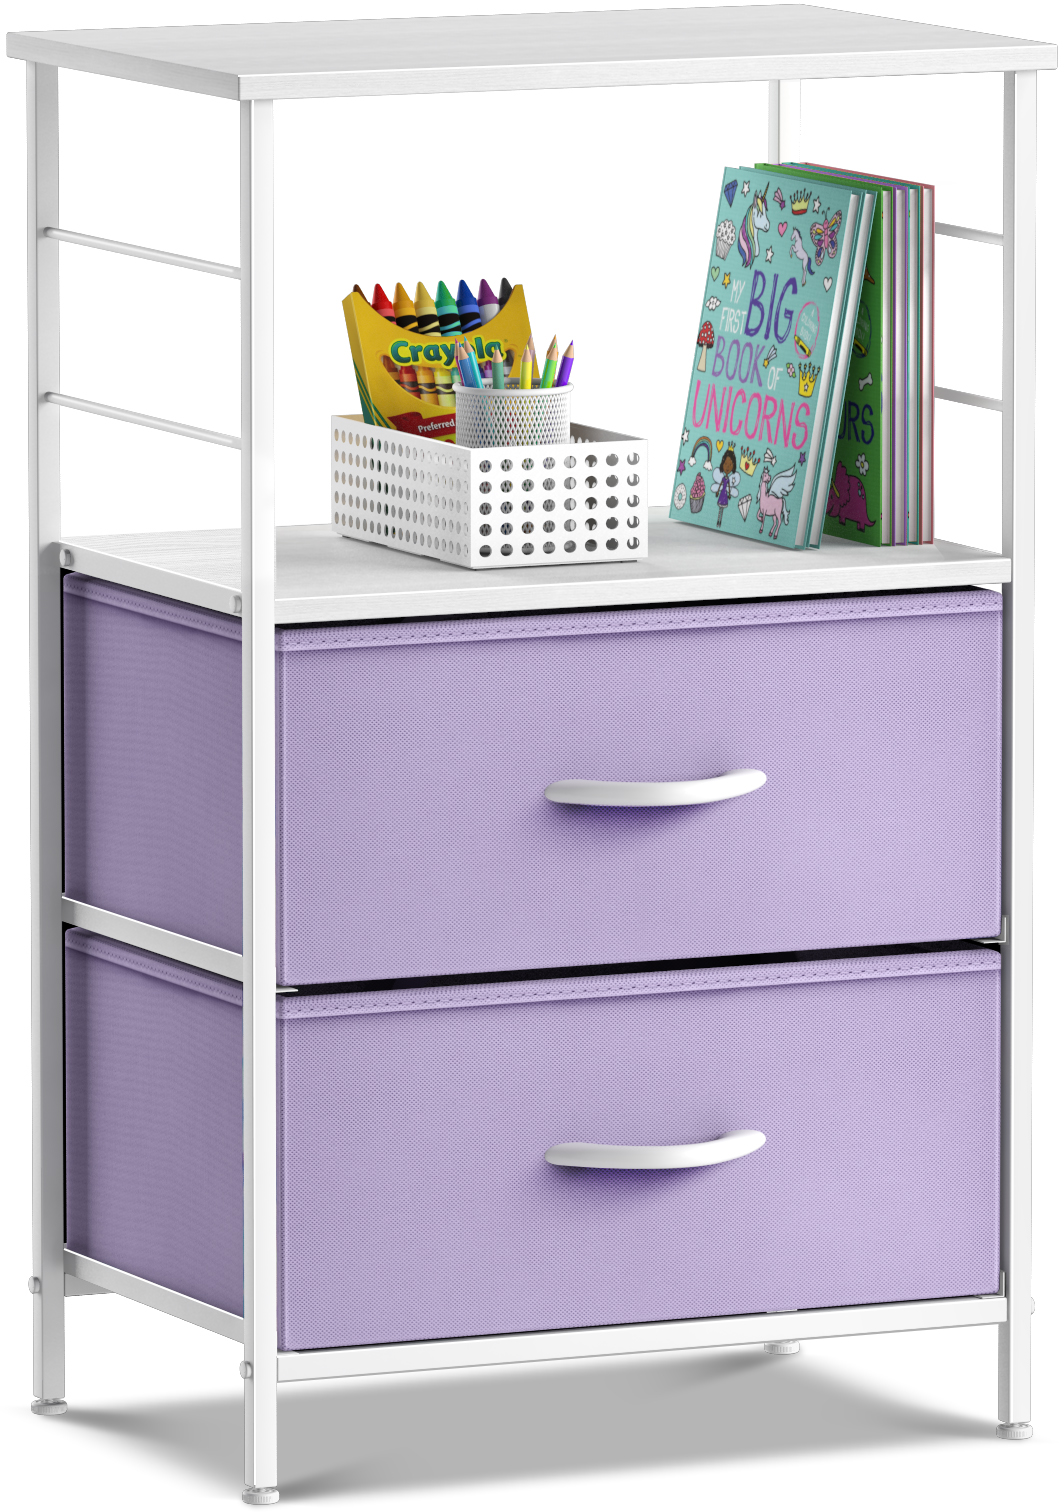 Sorbus Nightstand 2-Drawer Storage Dresser Kids, Teens Boys  Girls Bedroom  Furniture, Accent End Table Chest, College Dorm, Steel Frame, Wood Shelf   Top, Fabric Bins (Purple)